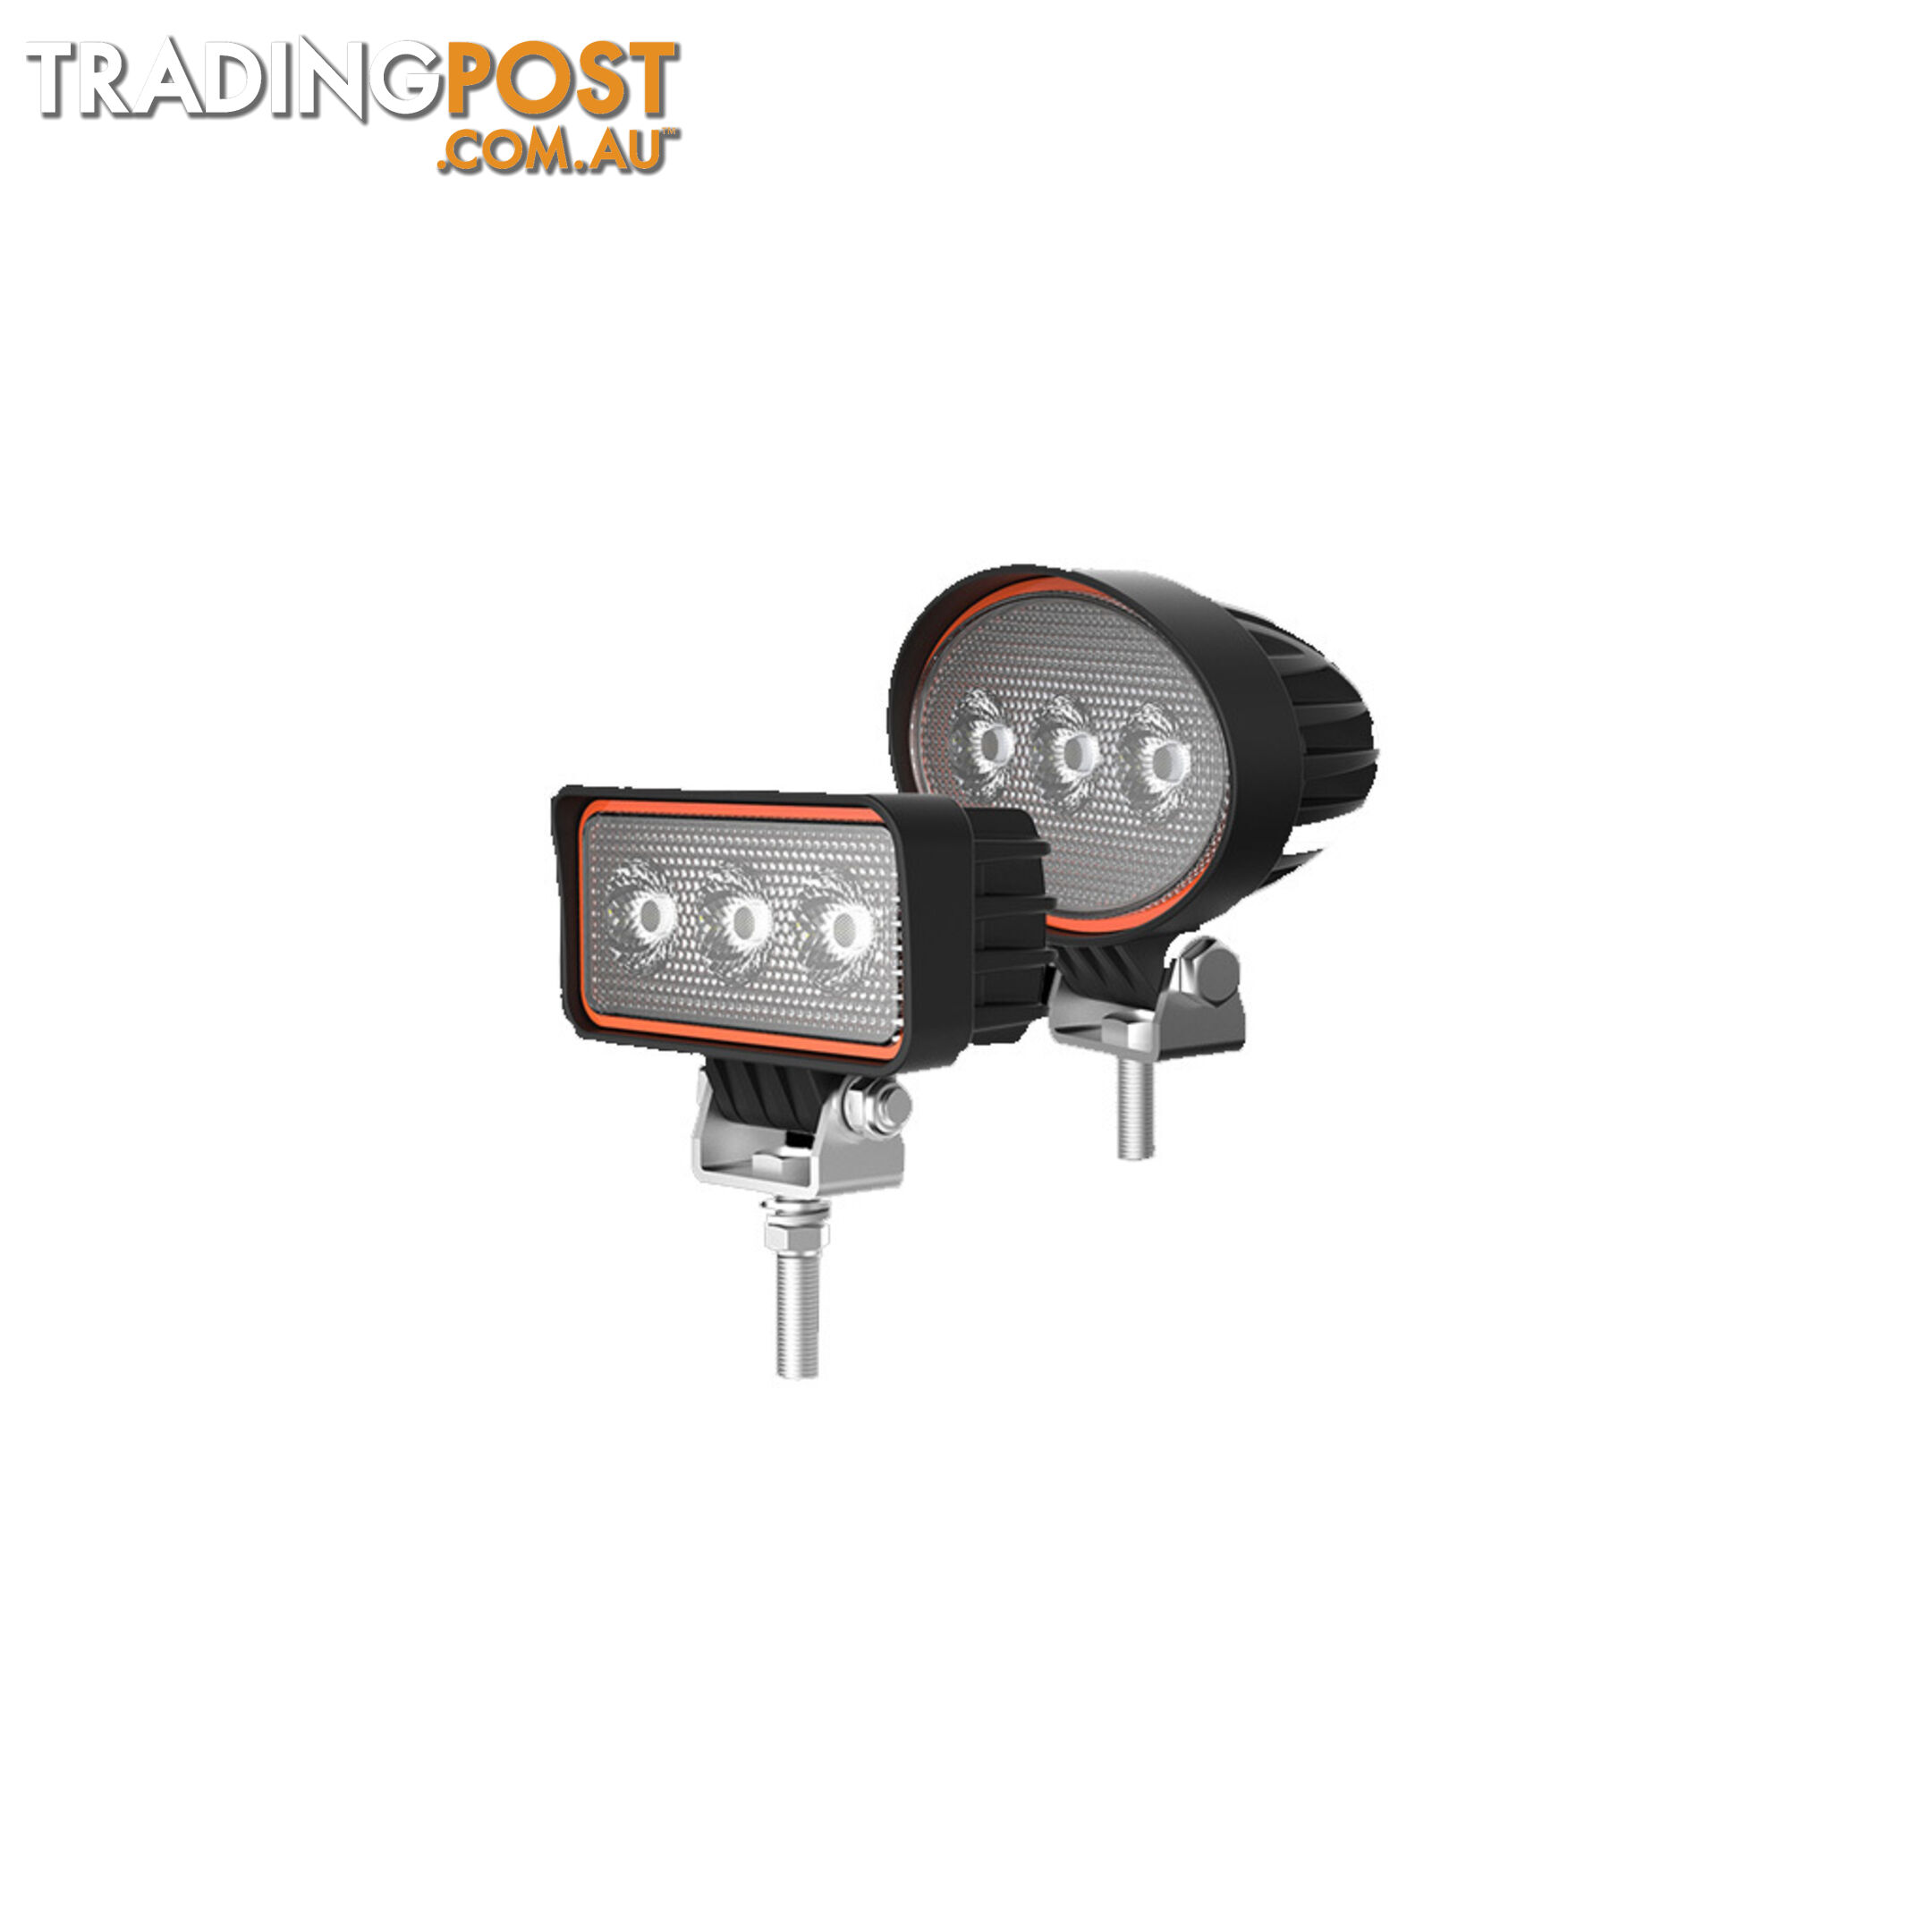 Whitevision 9W LED Work Lamp 10-30V 630Lm Round/Rectangle SKU - LWL350-9, LWL450-9